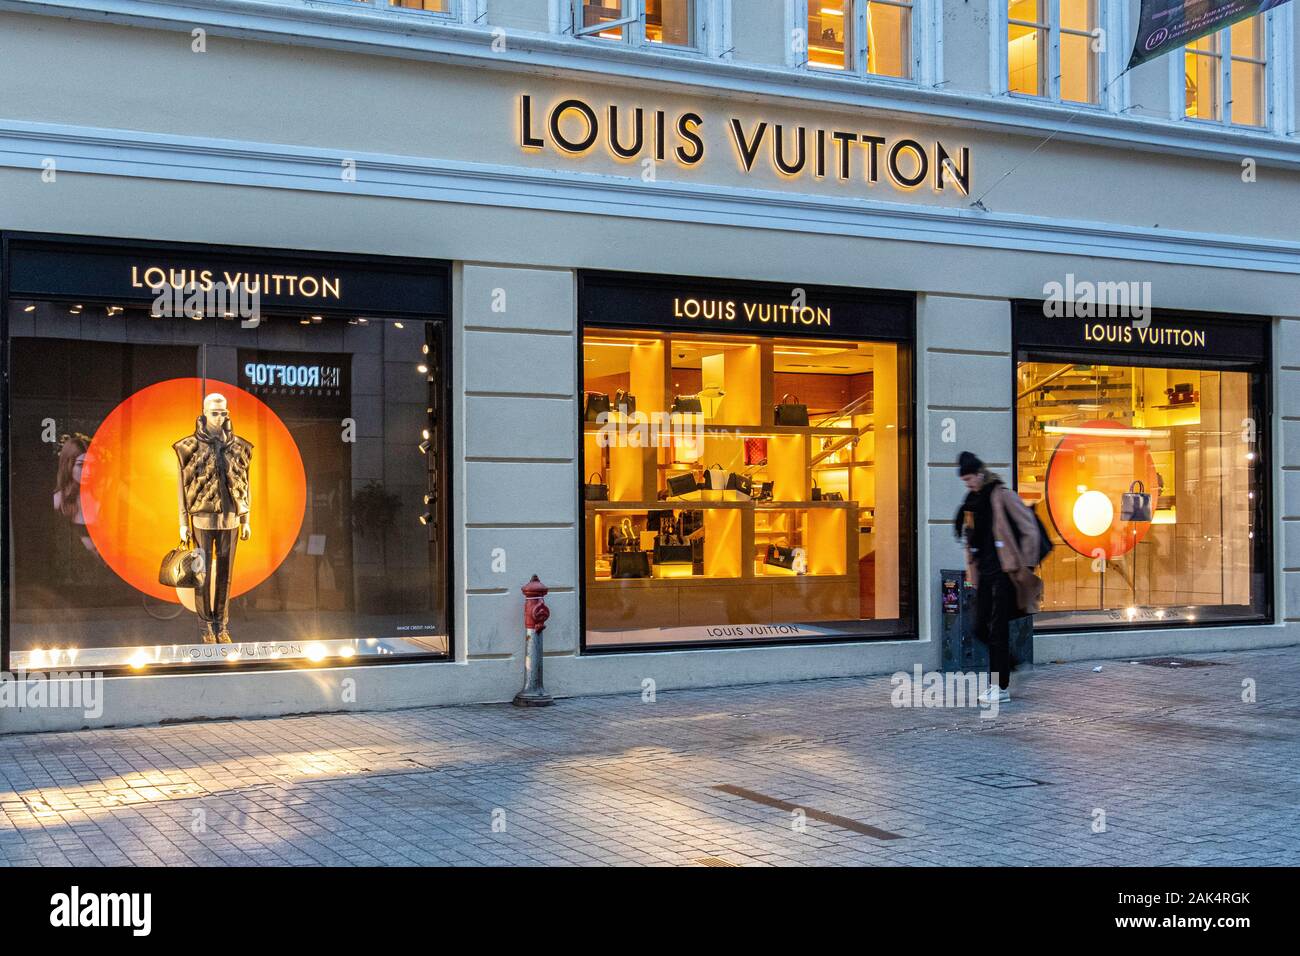 Louis Vuitton Store. Shop selling luxury, designer bags & luggage